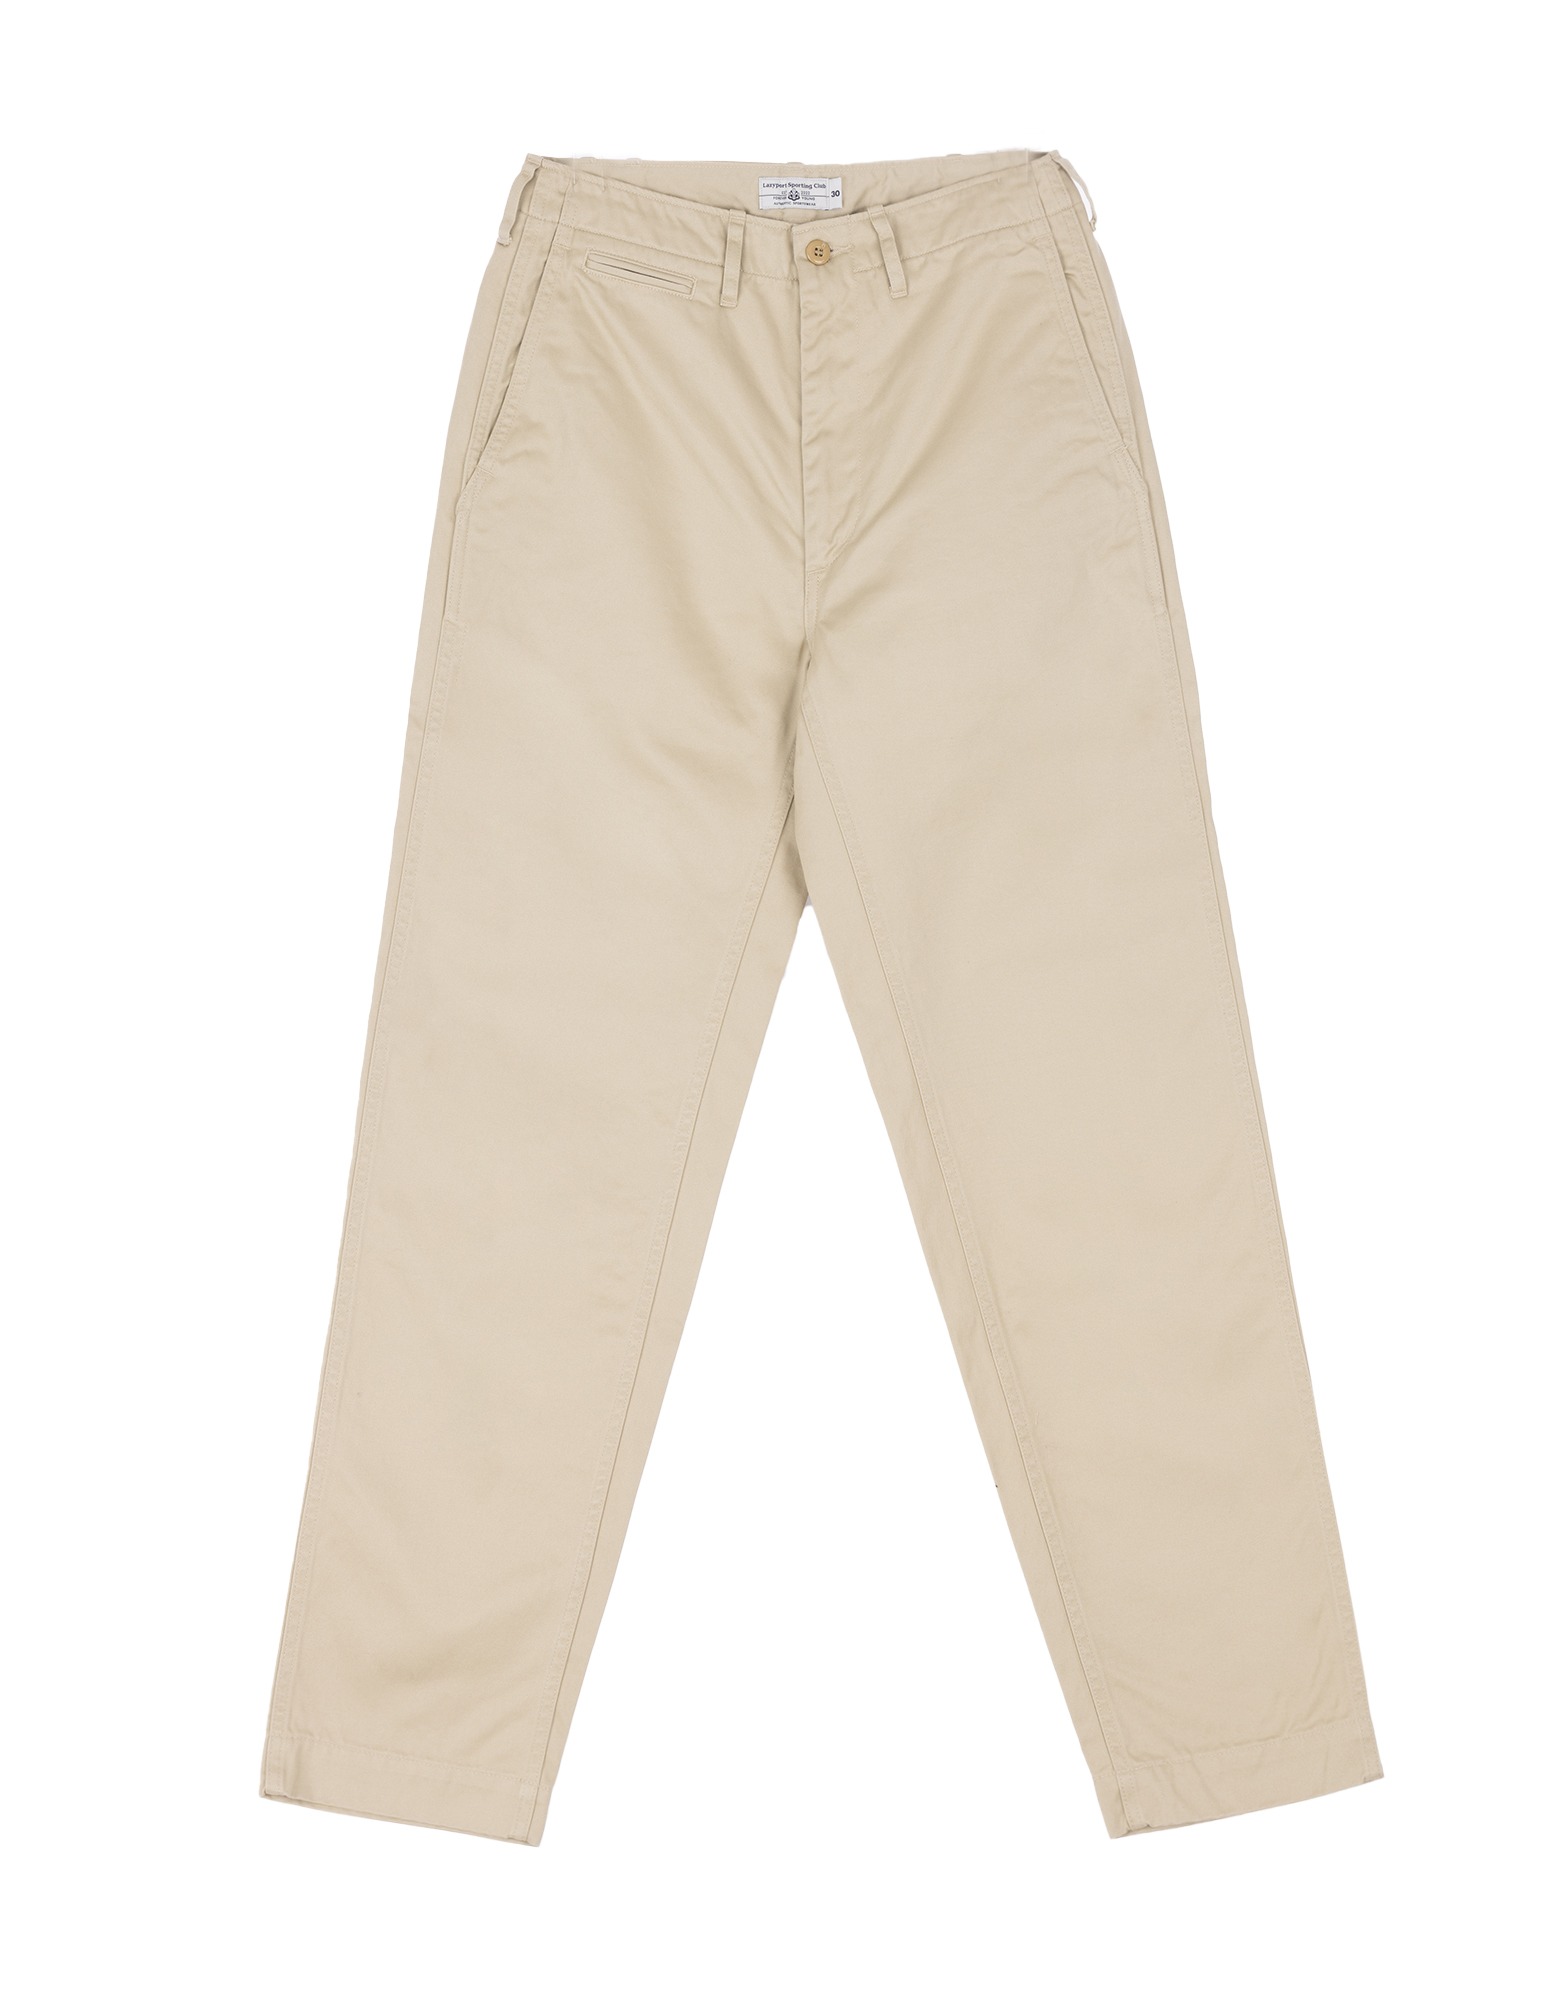 LSC Type1 Chino Pants (Beige)